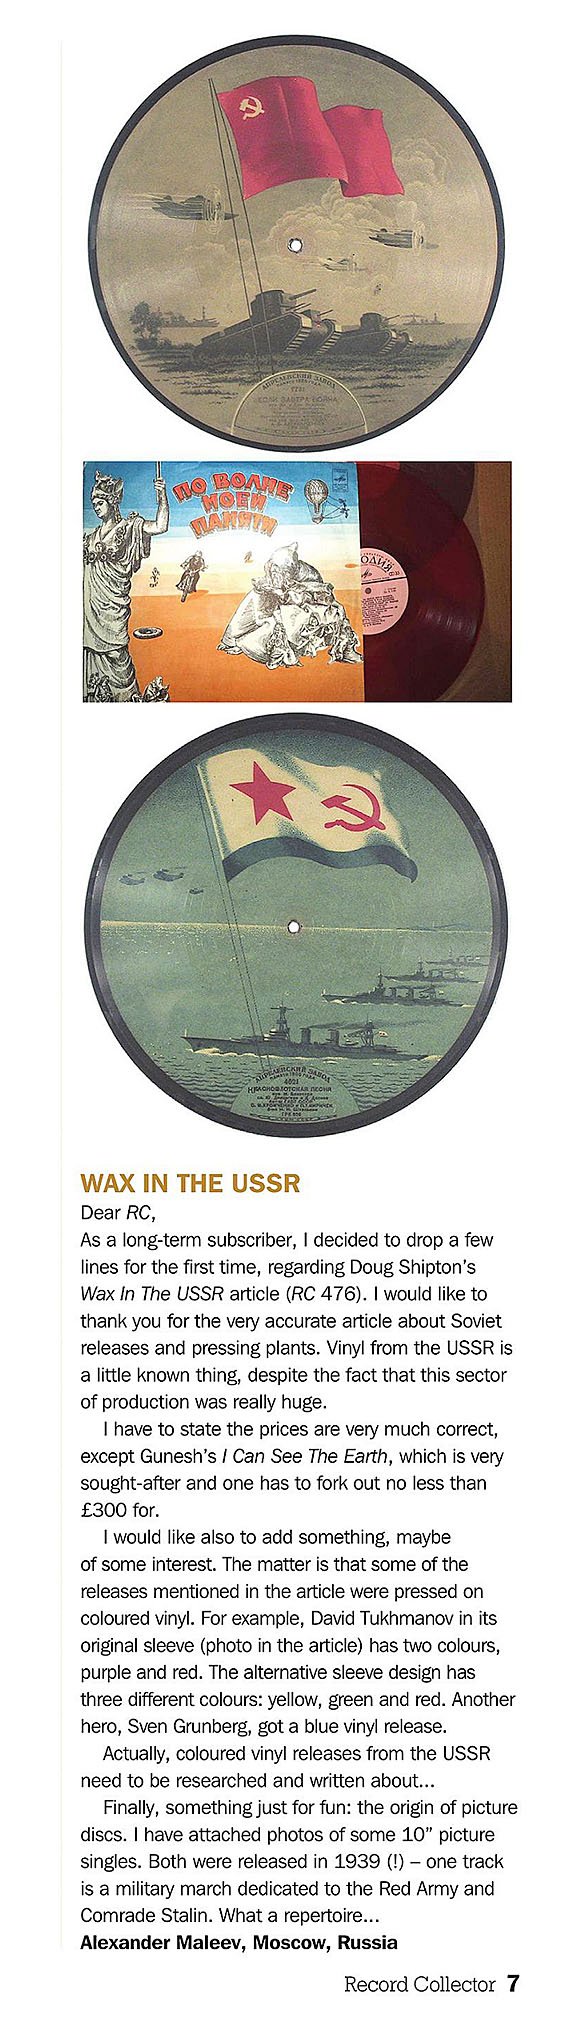 WAX IN THE USSR
[ВИНИЛ В СССР]